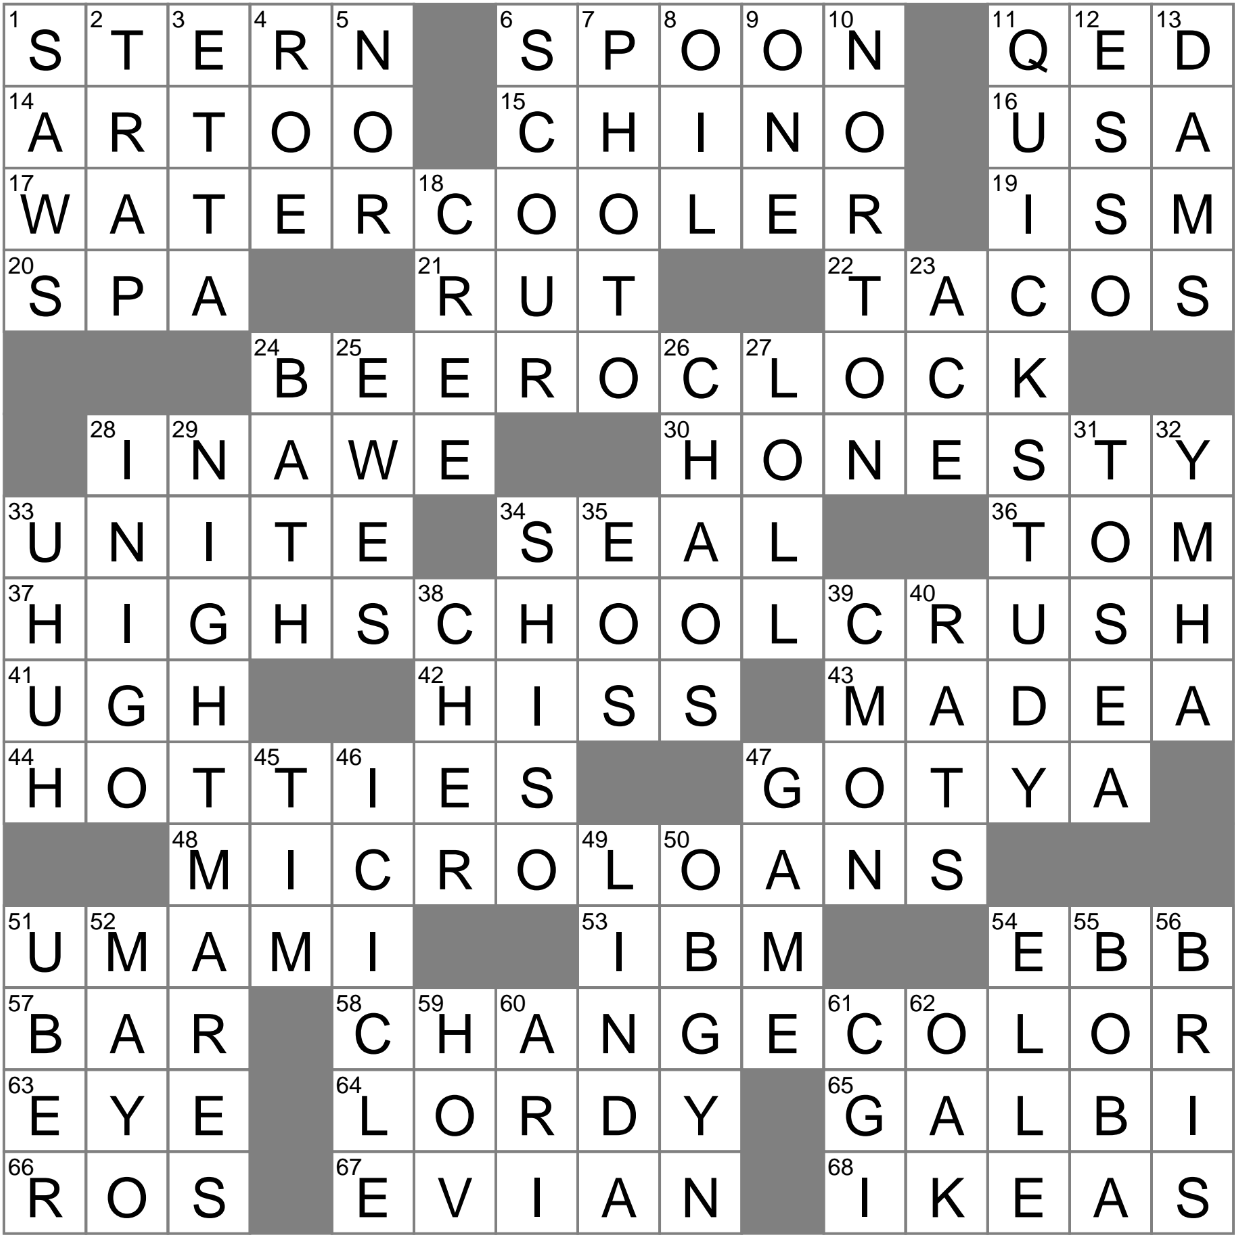 LA Times Crossword 30 Mar 23 Thursday LAXCrossword com